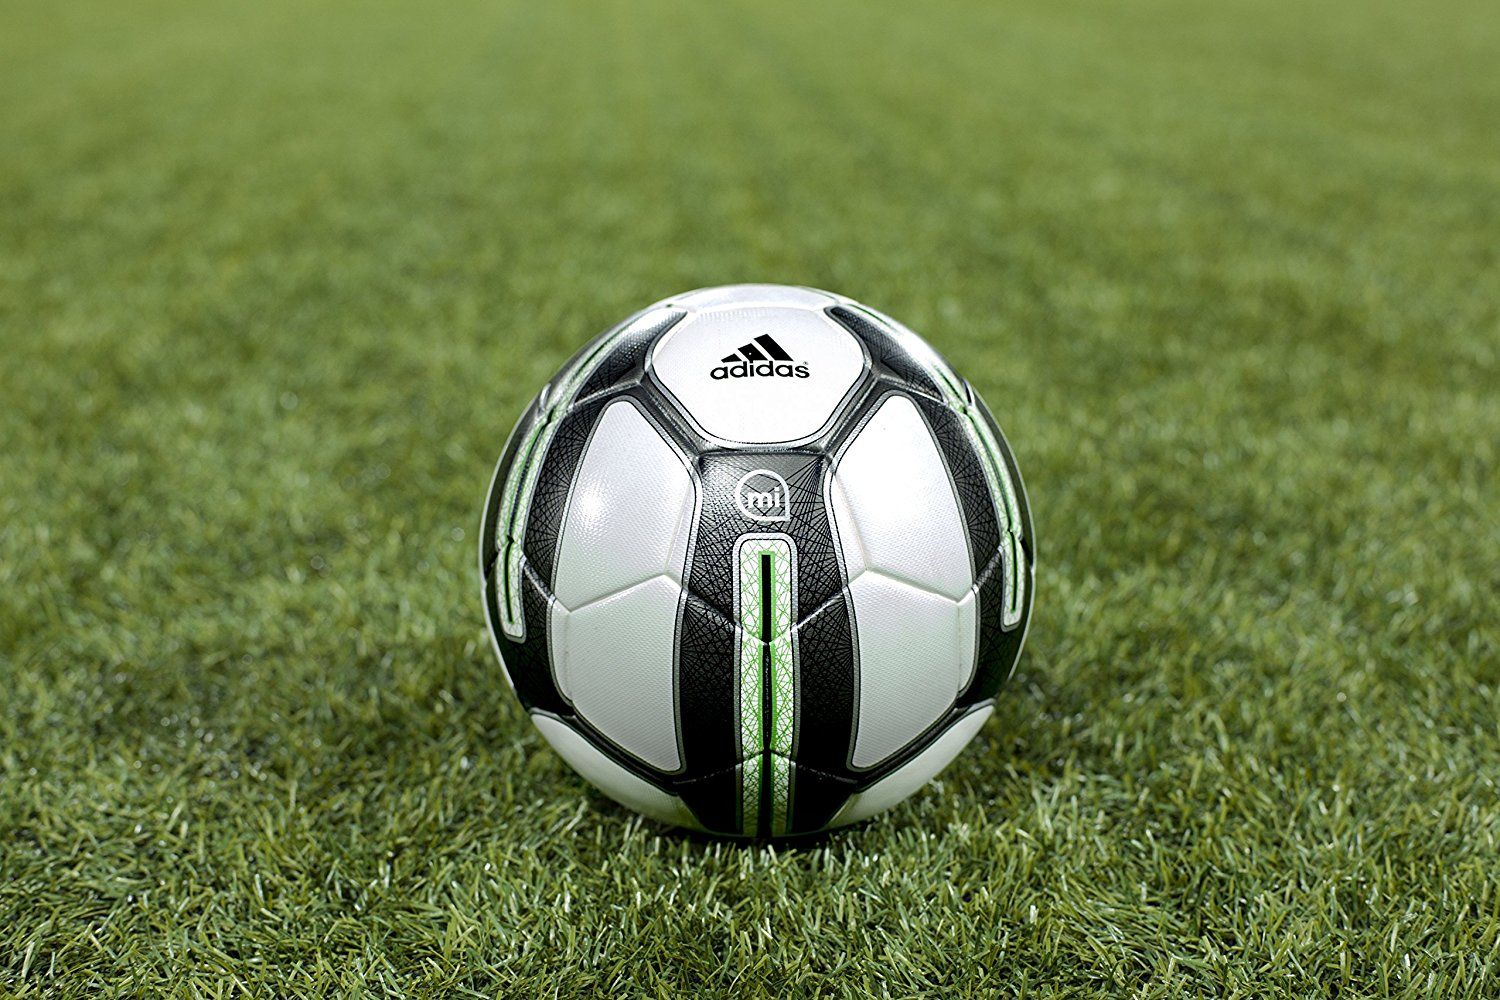 Adidas miCoach Smart soccer Ball